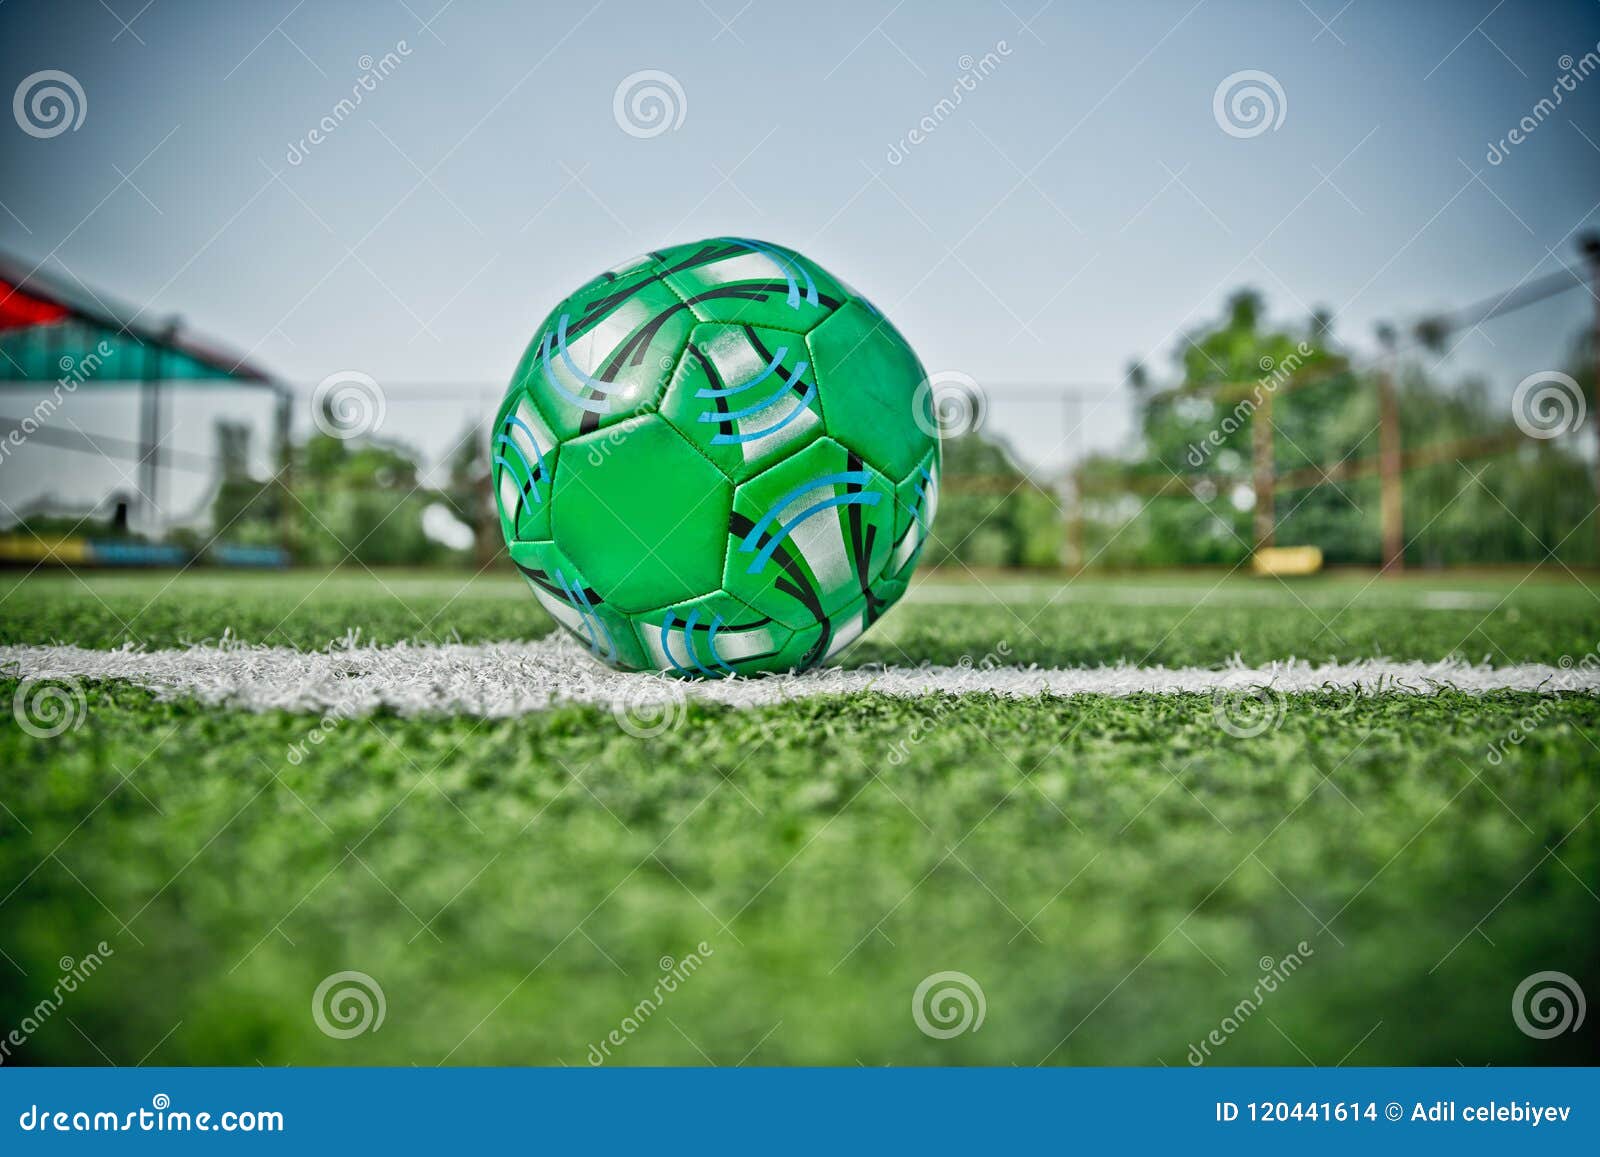 Mini Football Goal on an Artificial Grass . Inside of Indoor